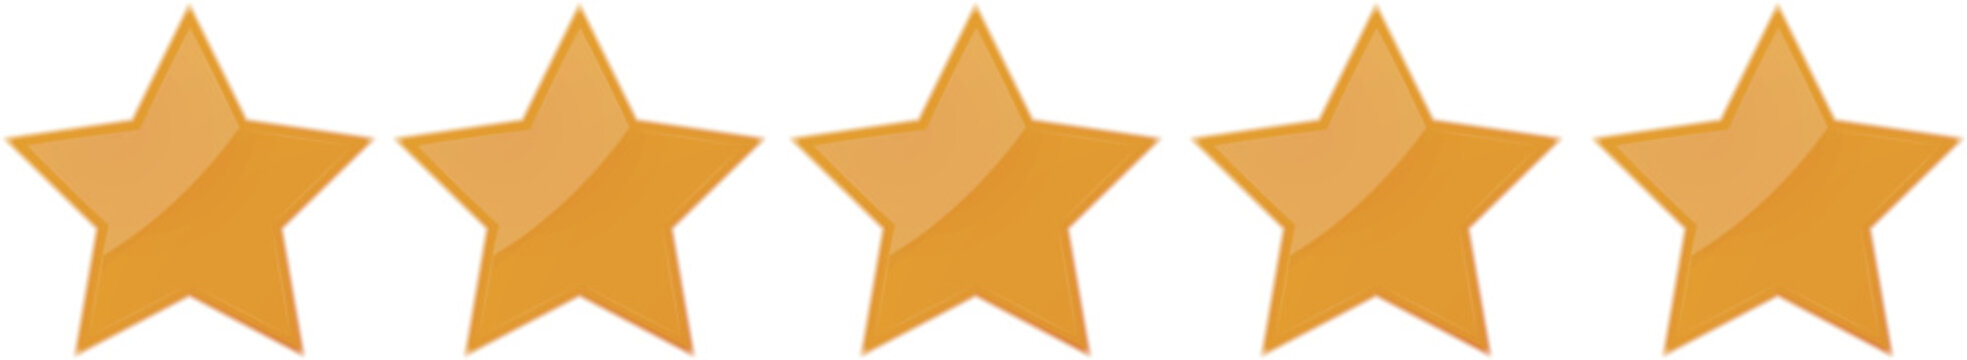 Star rating illustration , customer ranking